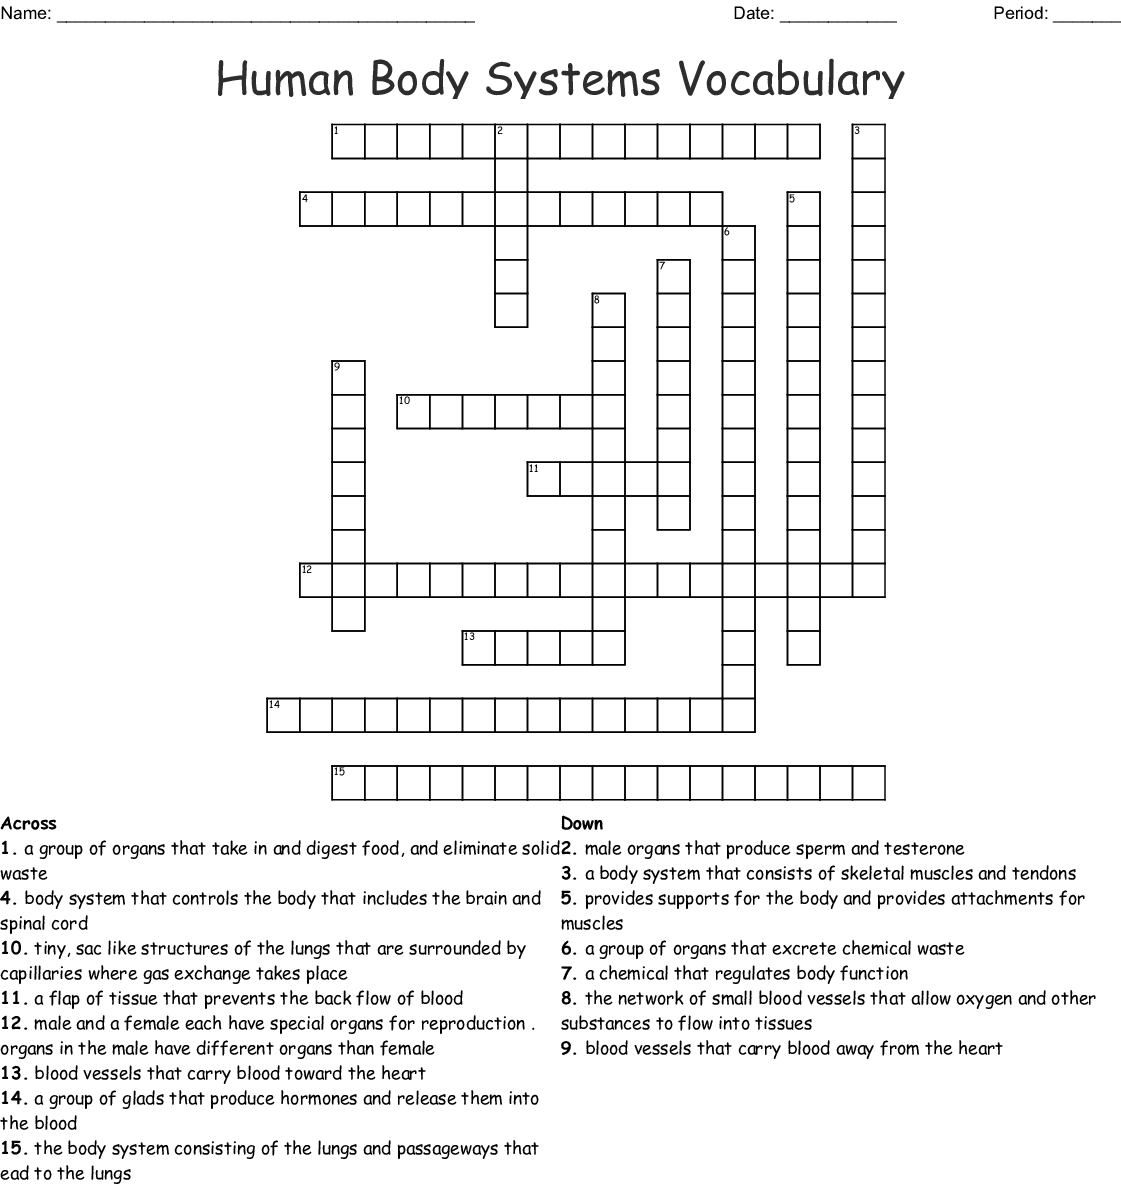 Human Body Systems Vocabulary Crossword  Word